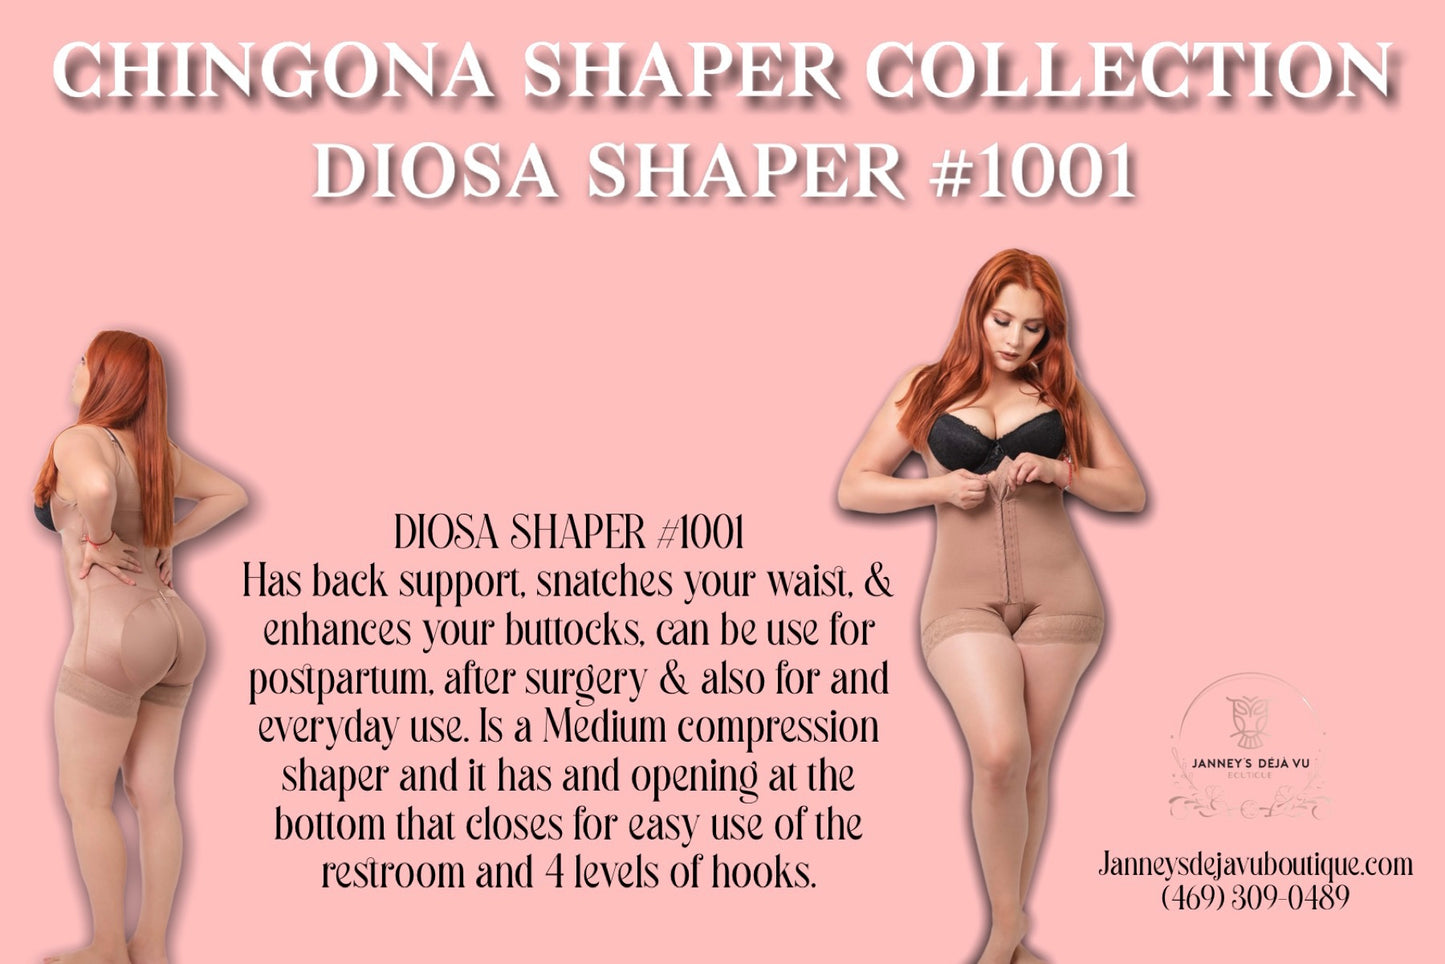 Diosa Shaper # 1001 short LEG